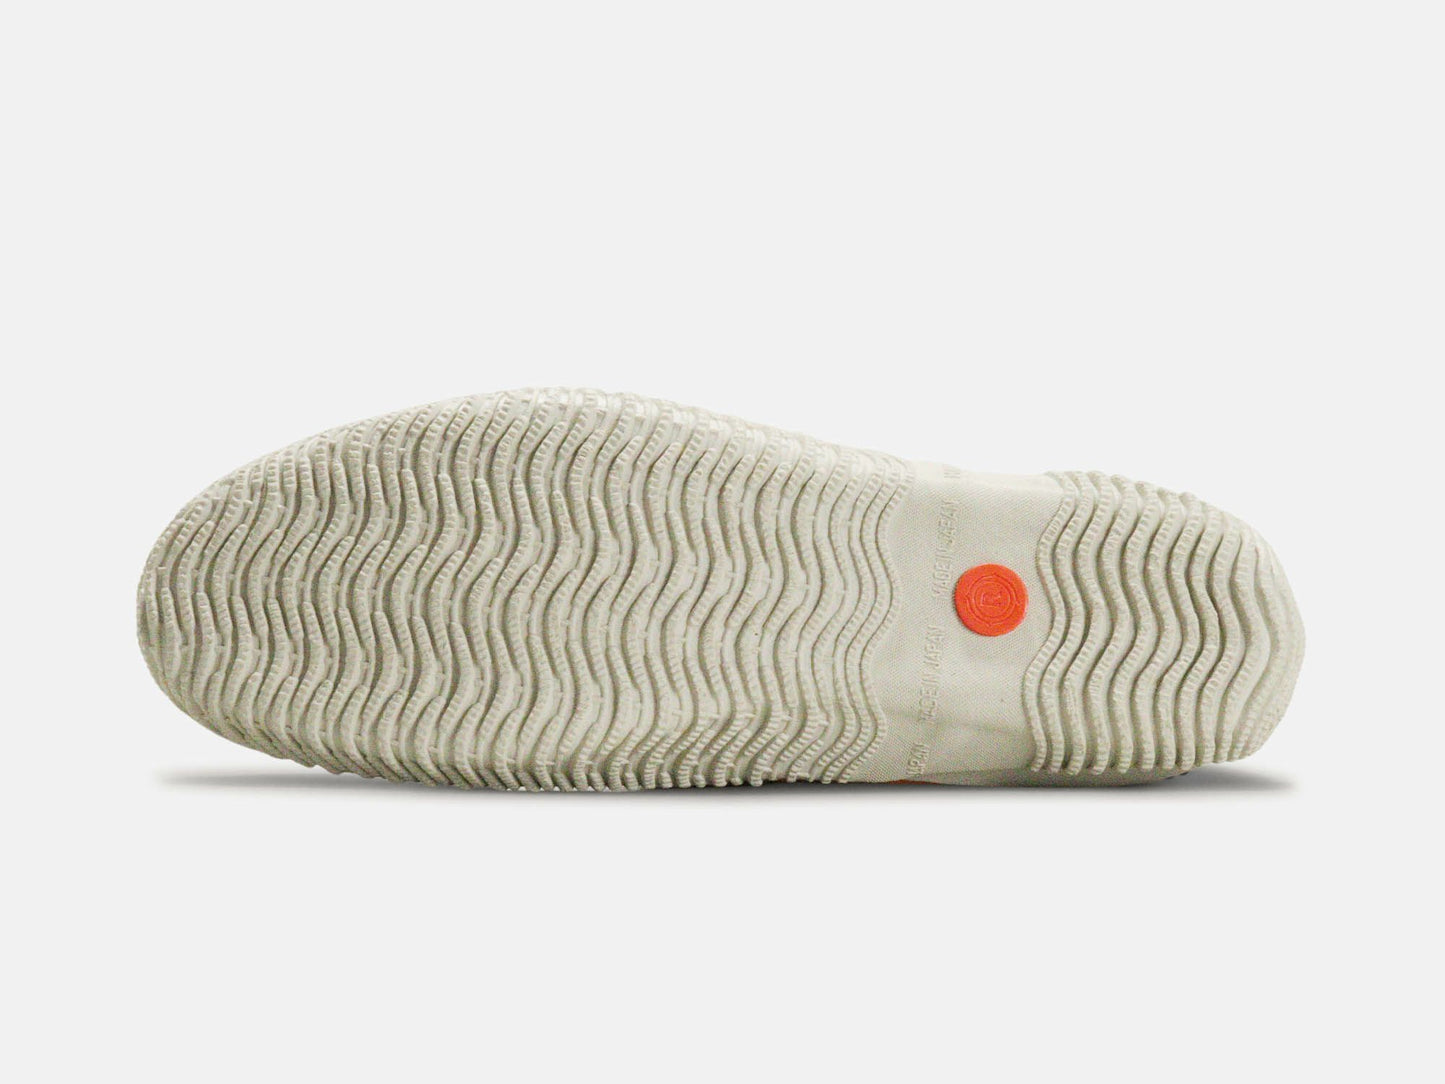 SPINGLE MOVEのスニーカー「SPM-295 Orange」の靴底の商品画像